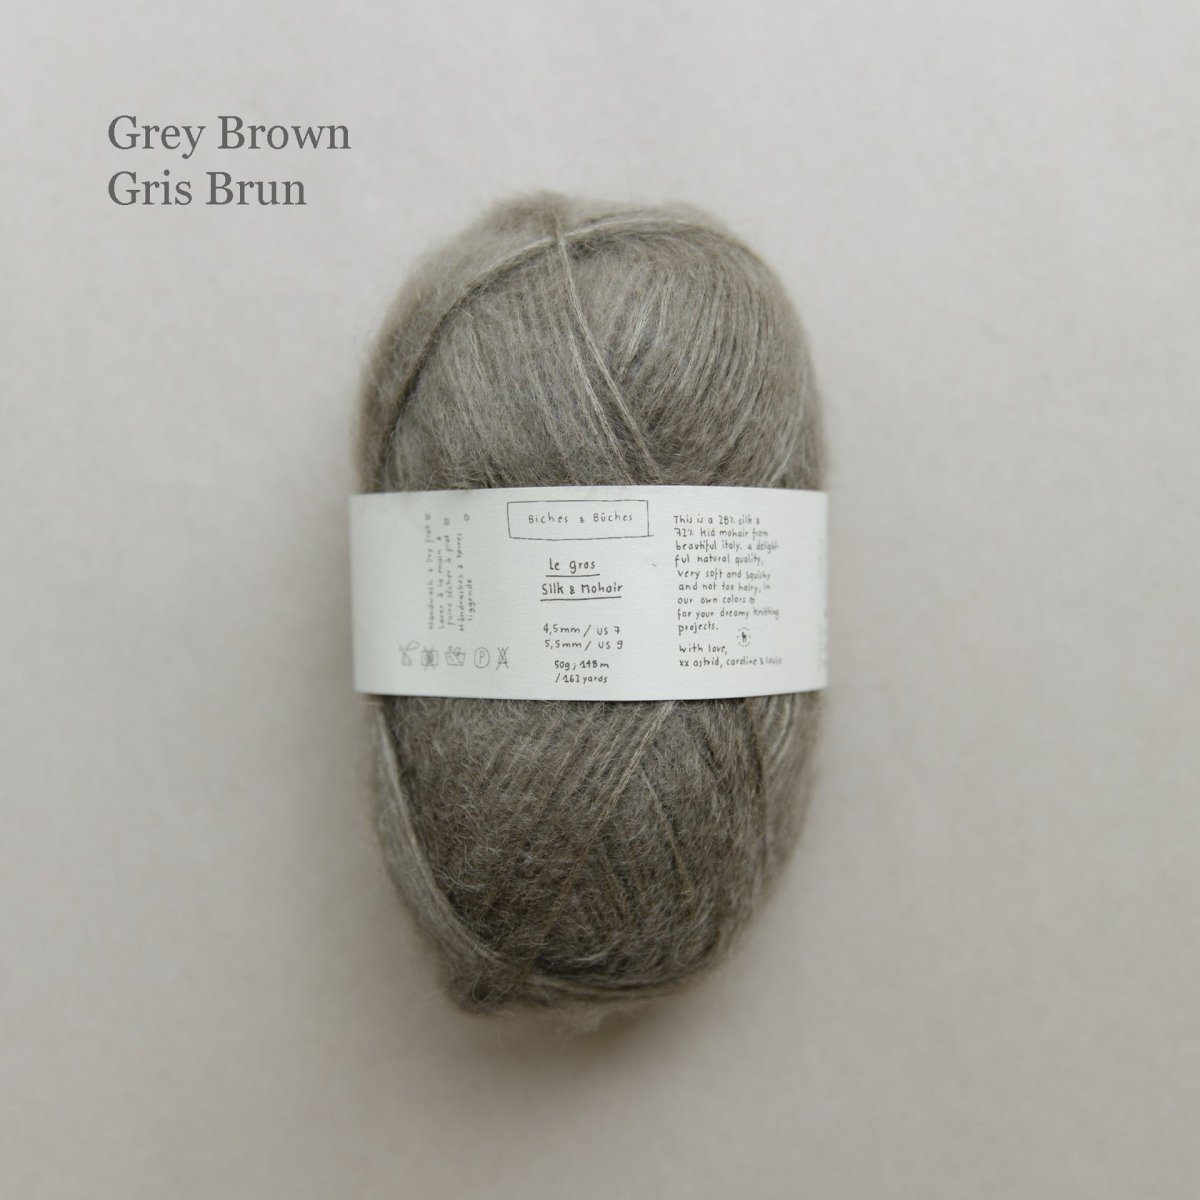 le gros silk & mohair - grey brown at Wabi Sabi